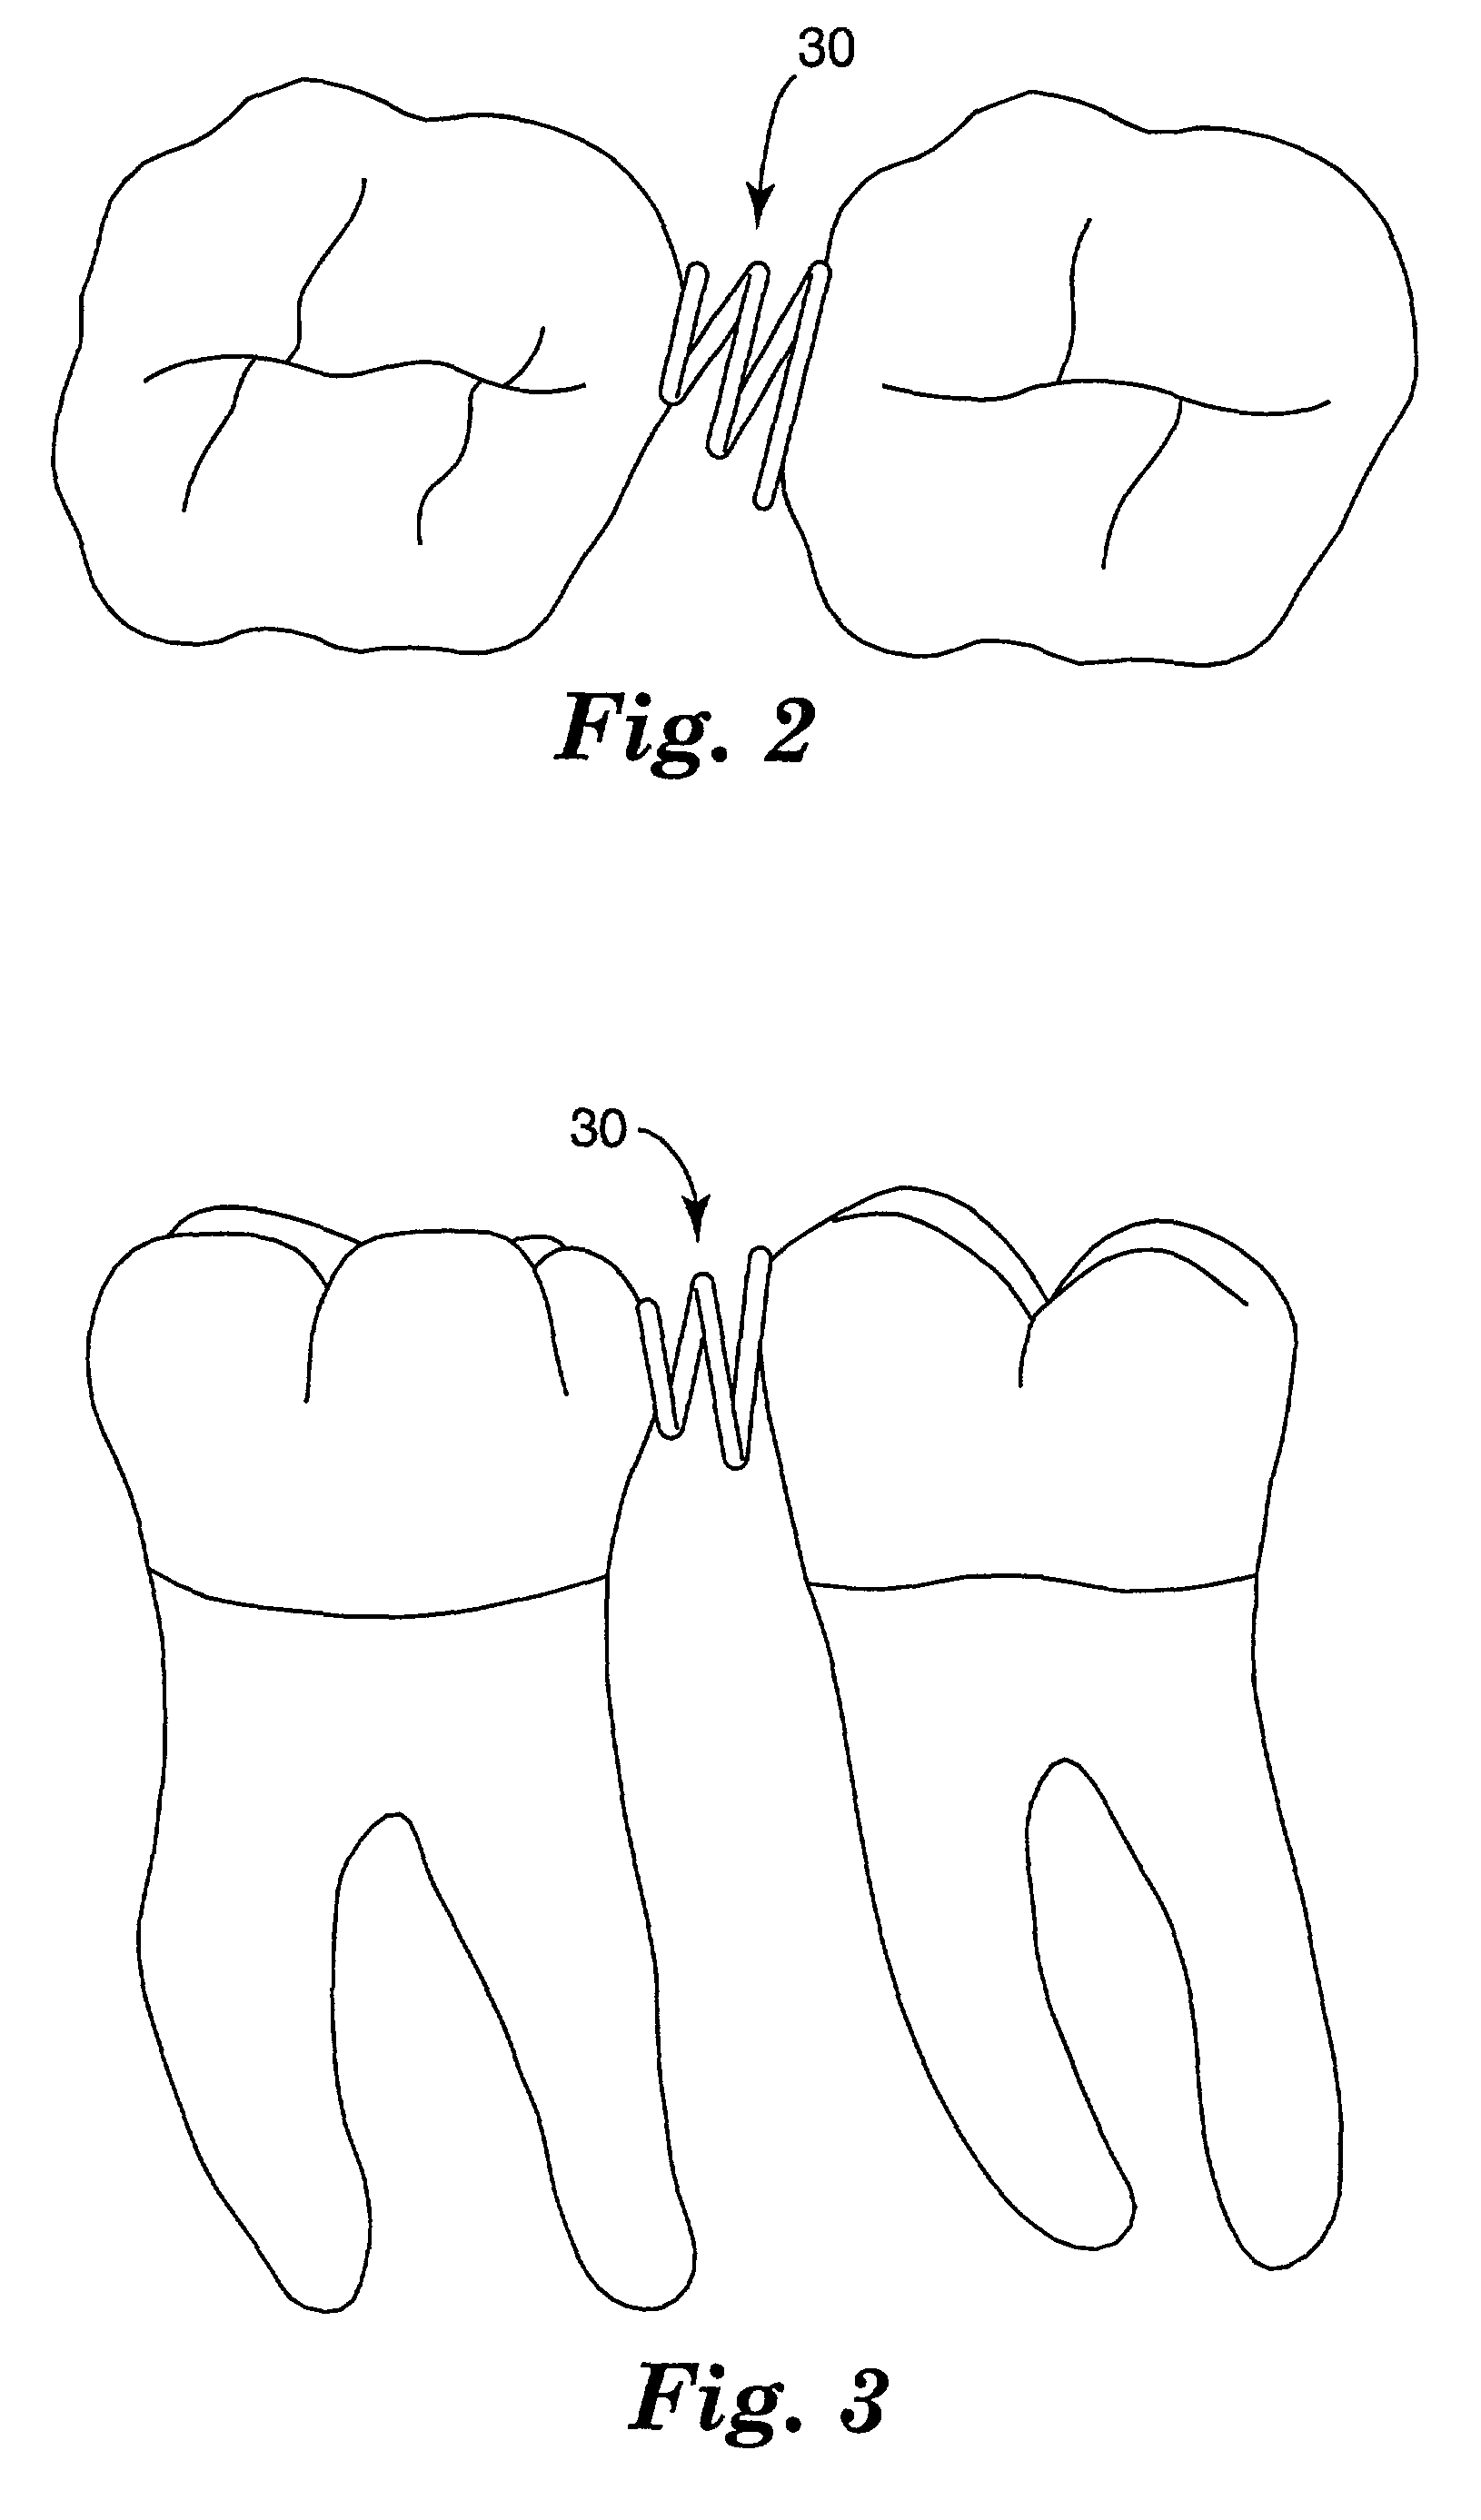 Orthodontic separators